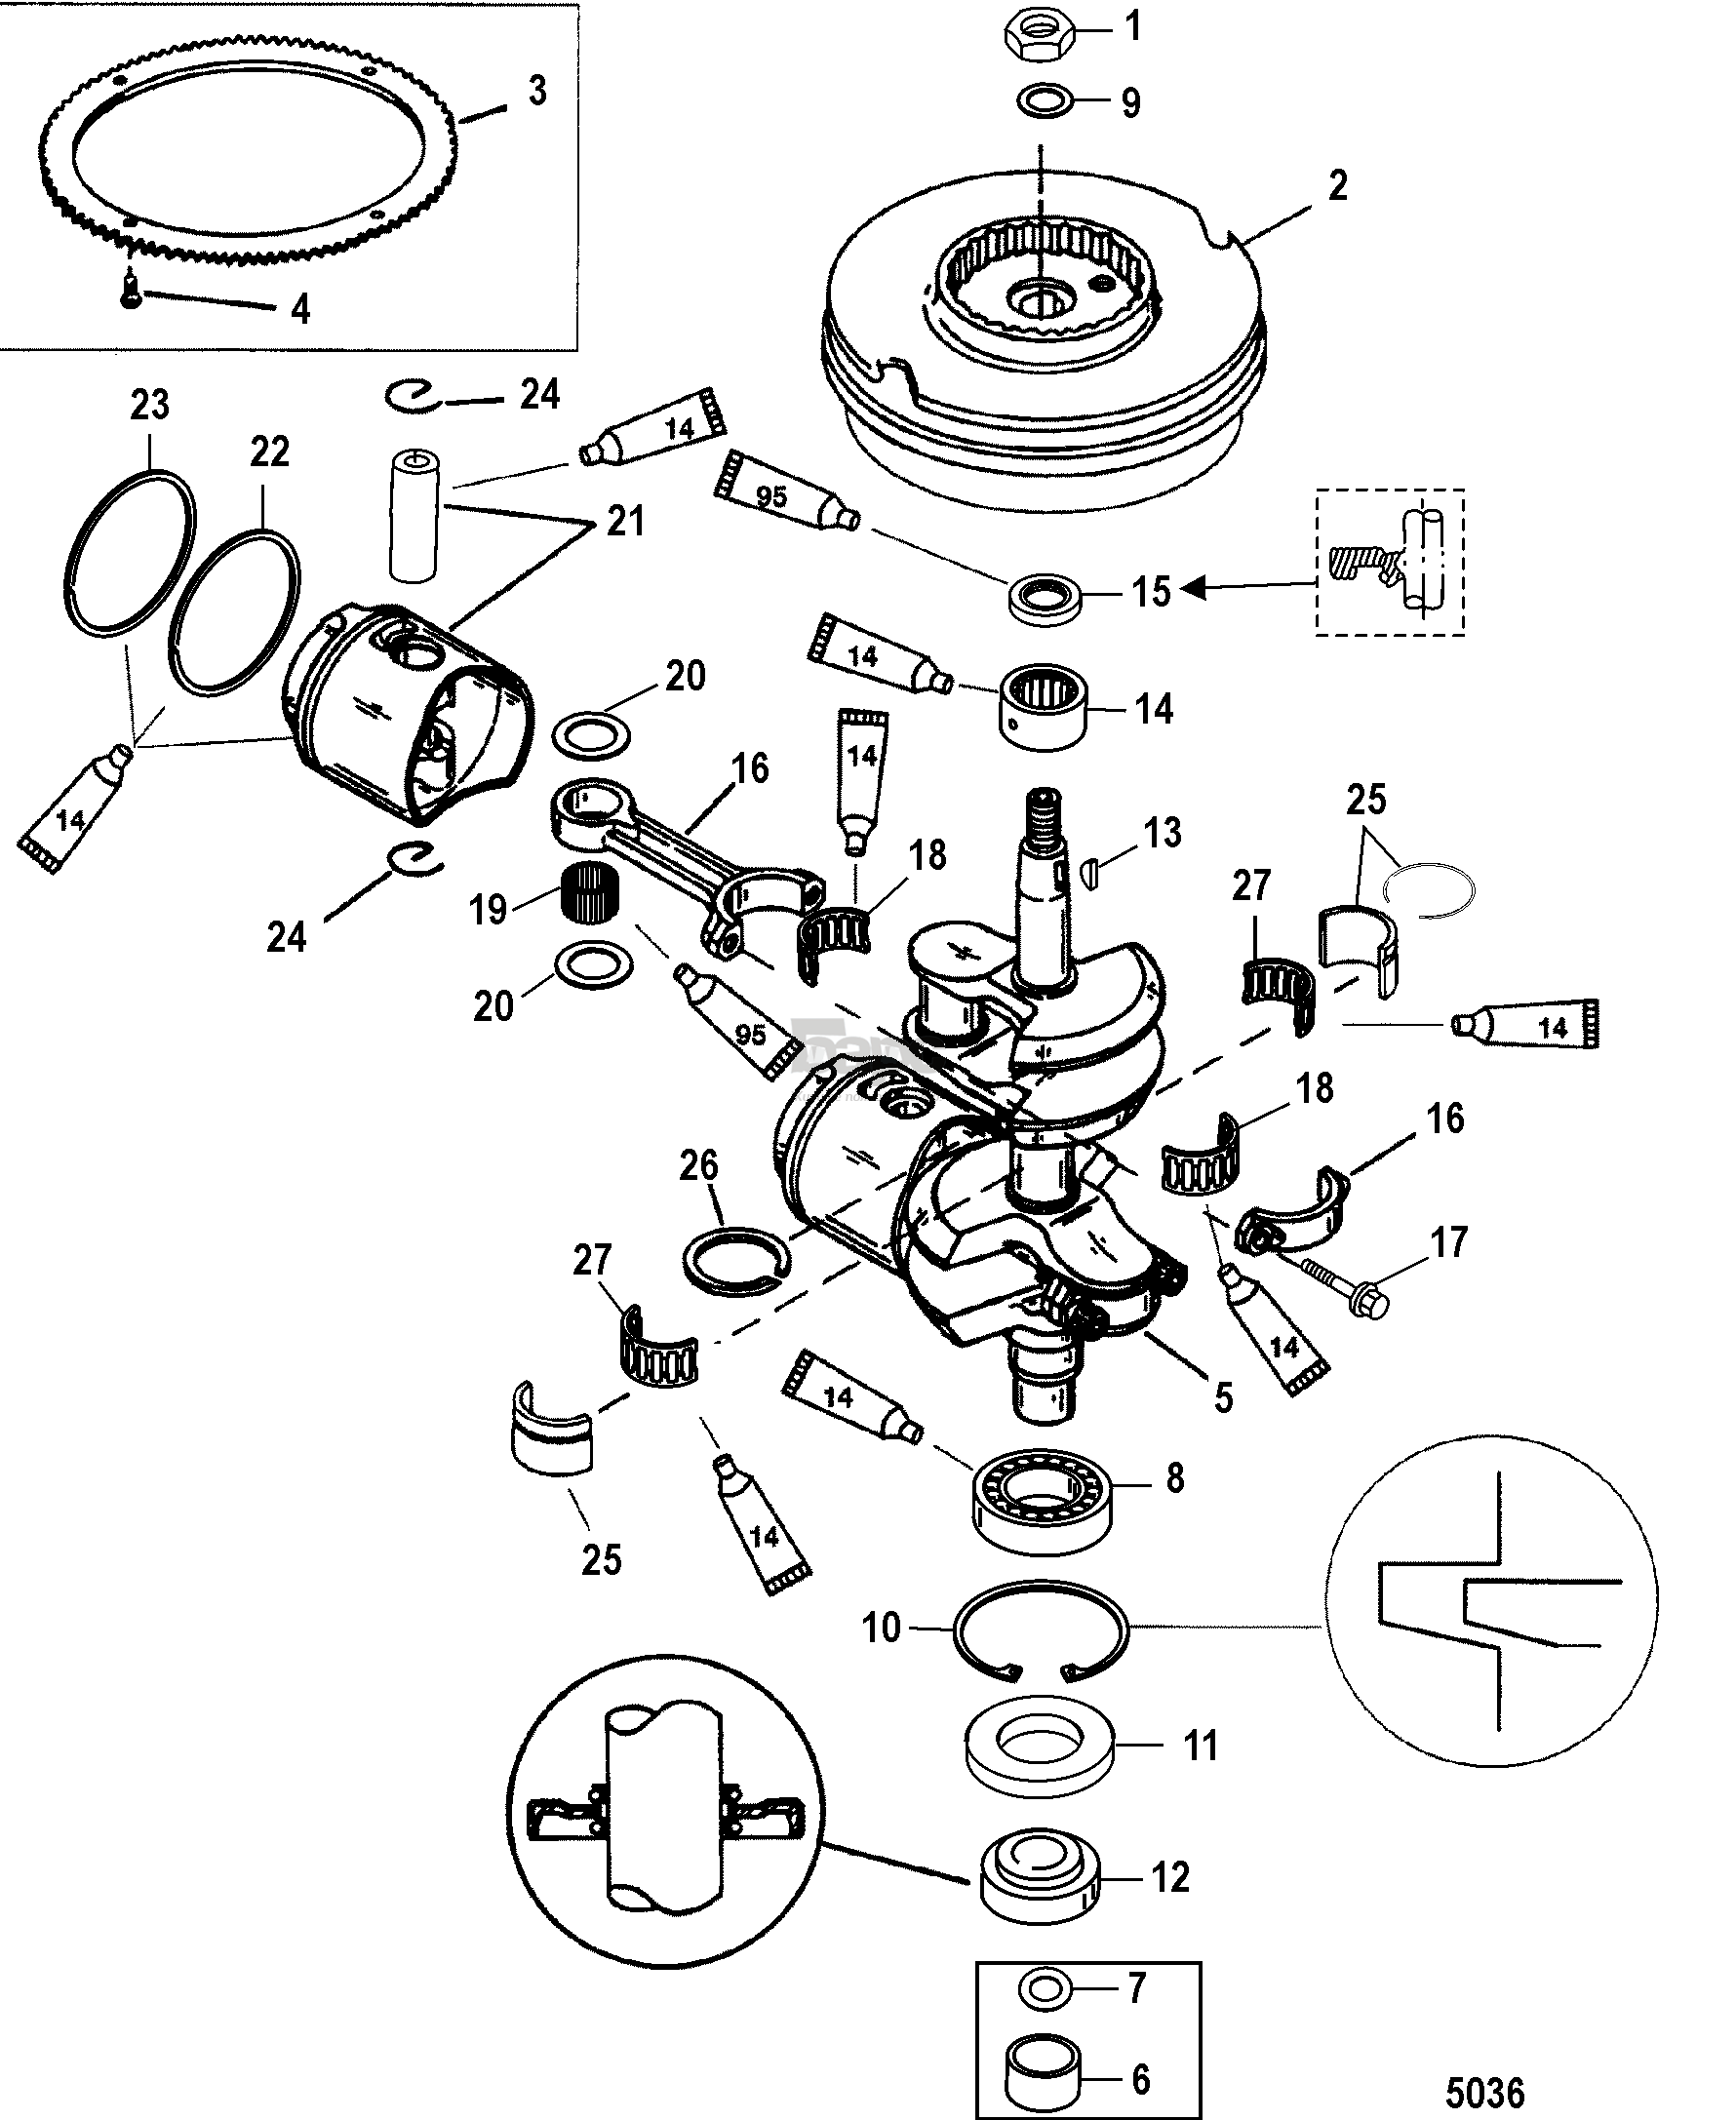 Crankshaft(Pistons and Flywheel)